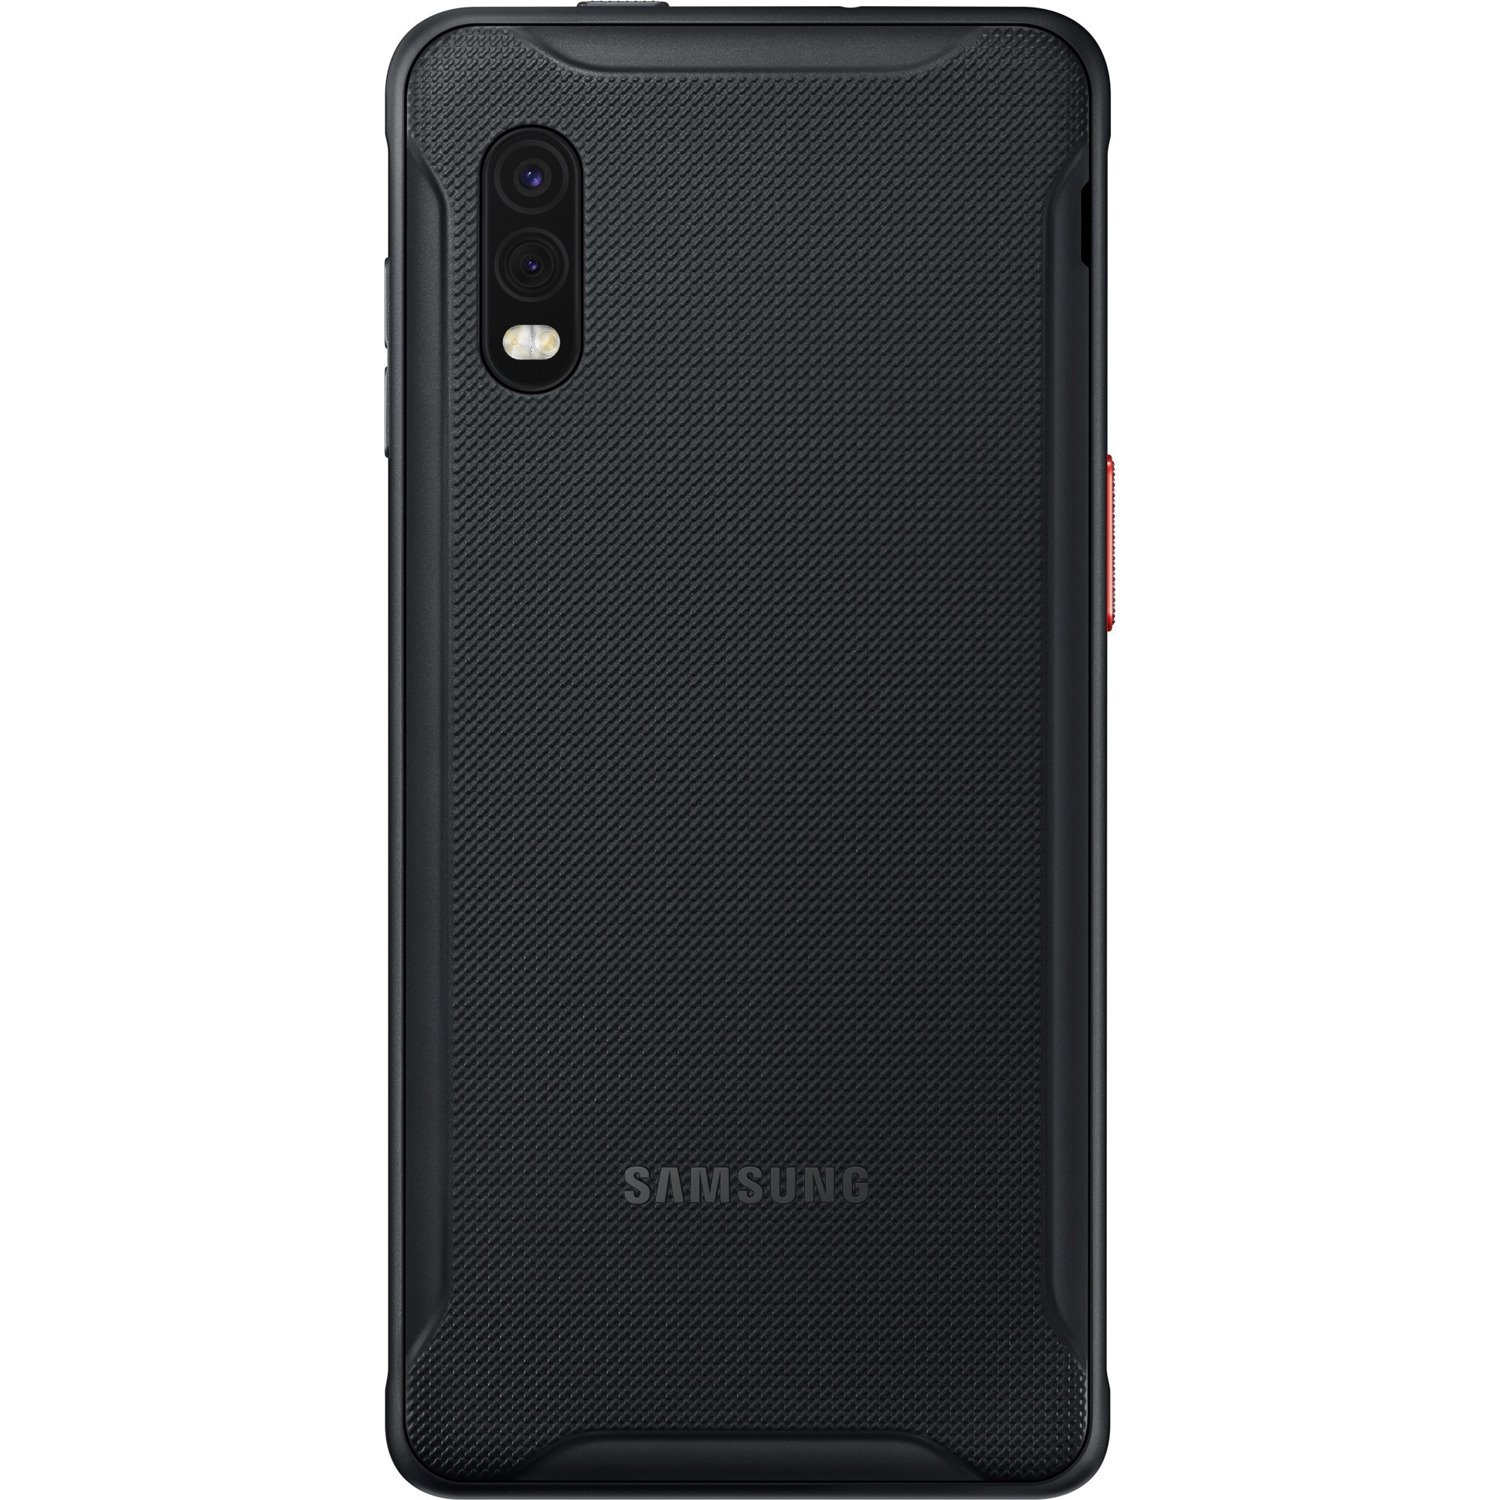 Samsung Galaxy XCover Pro SM-G715FN 64 GB Smartphone - 6.3" Active Matrix TFT LCD Full HD Plus 2340 x 1080 - Cortex A73Quad-core (4 Core) 2.30 GHz + Cortex A53 Quad-core (4 Core) 1.70 GHz - 4 GB RAM - Android 10 - 4G - Black